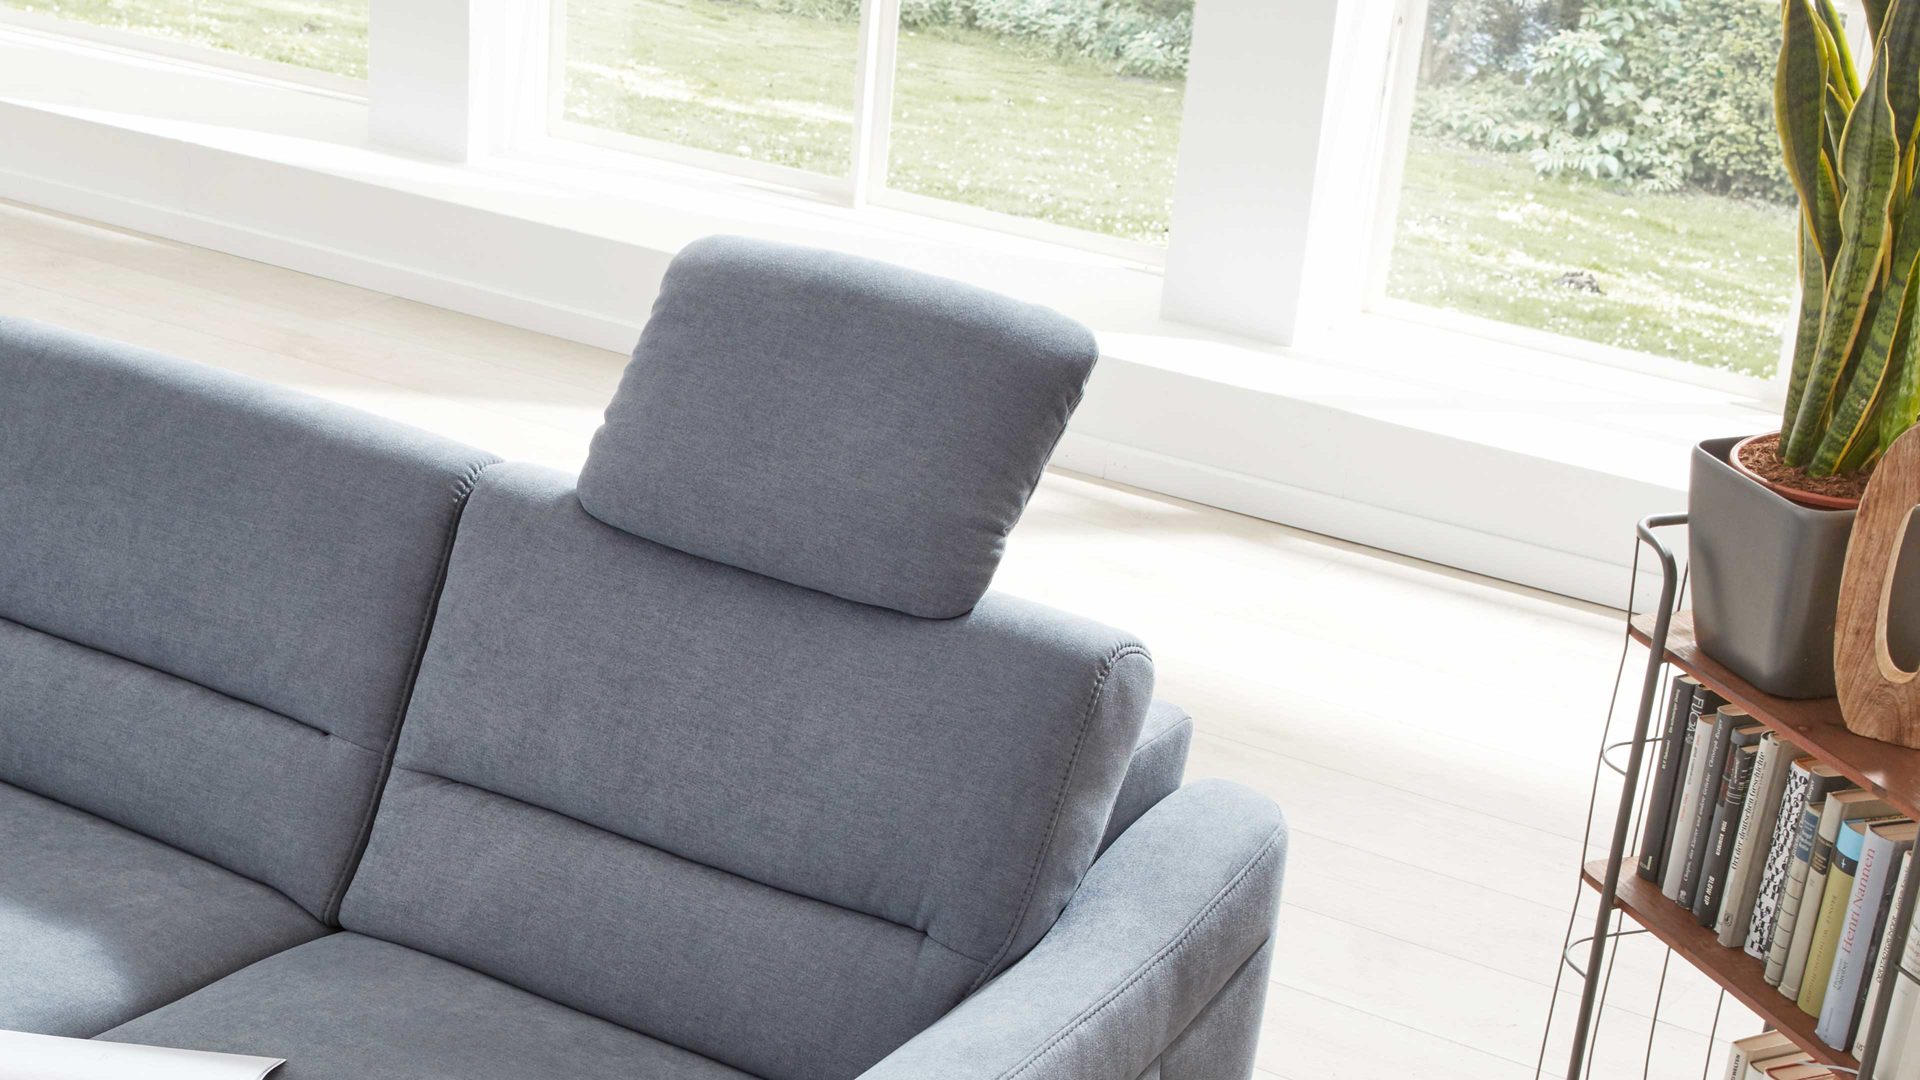 Interliving Sofa Serie 4305 – Comfort-Kopfstütze CKS, eisblauer Bezug Miro